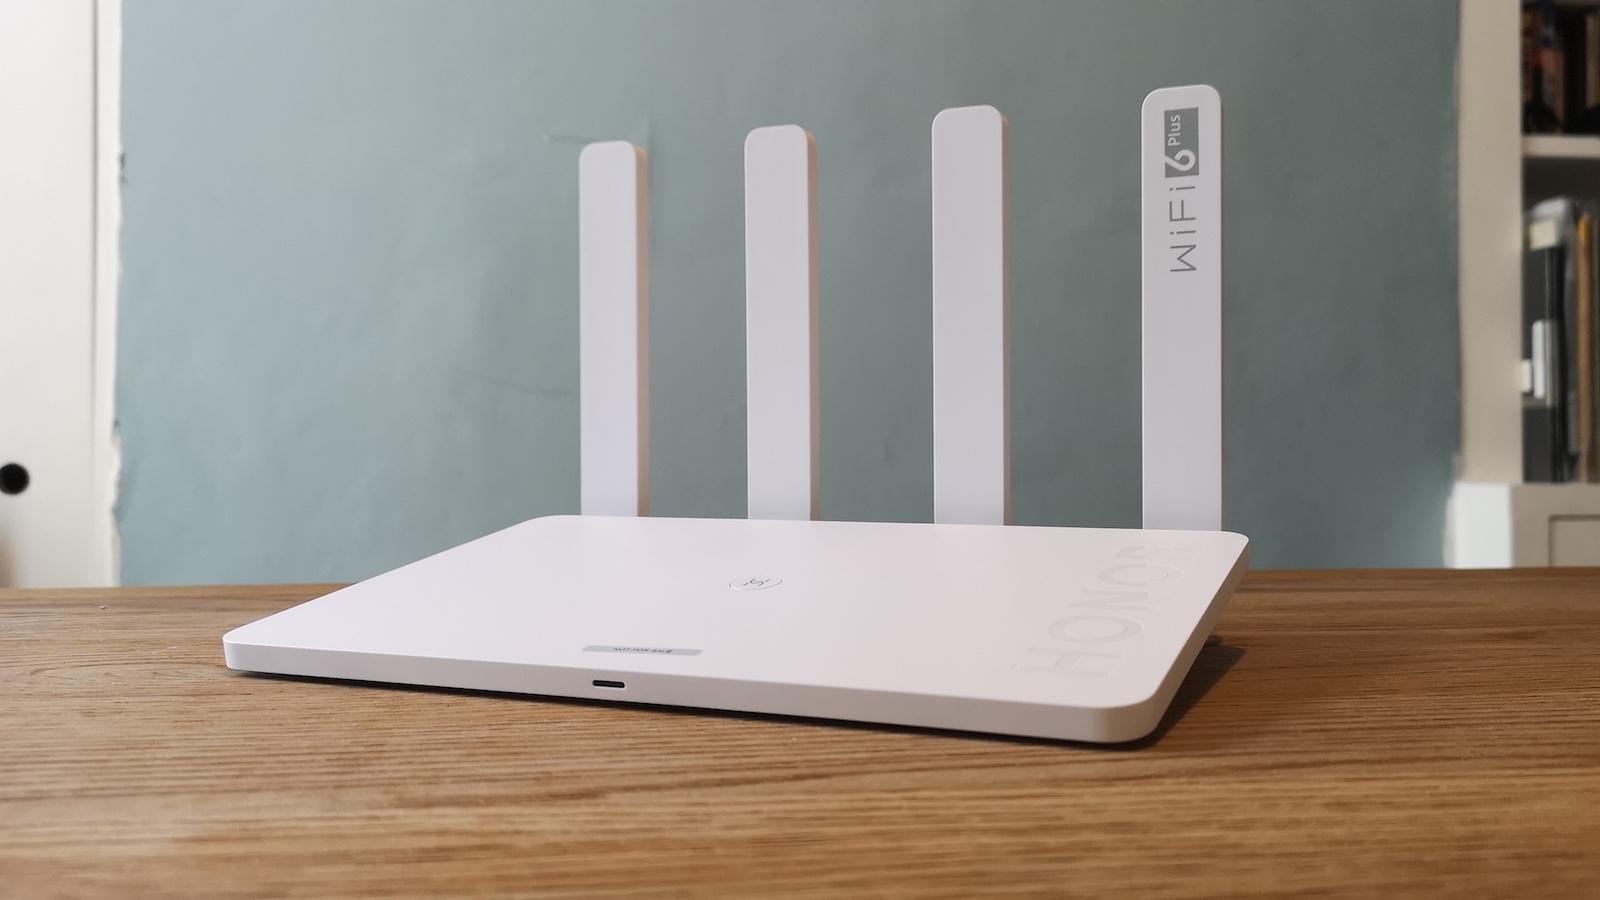   Honor Router 3 / Huawei AX3 - Wi-Fi 6 de mejor valor